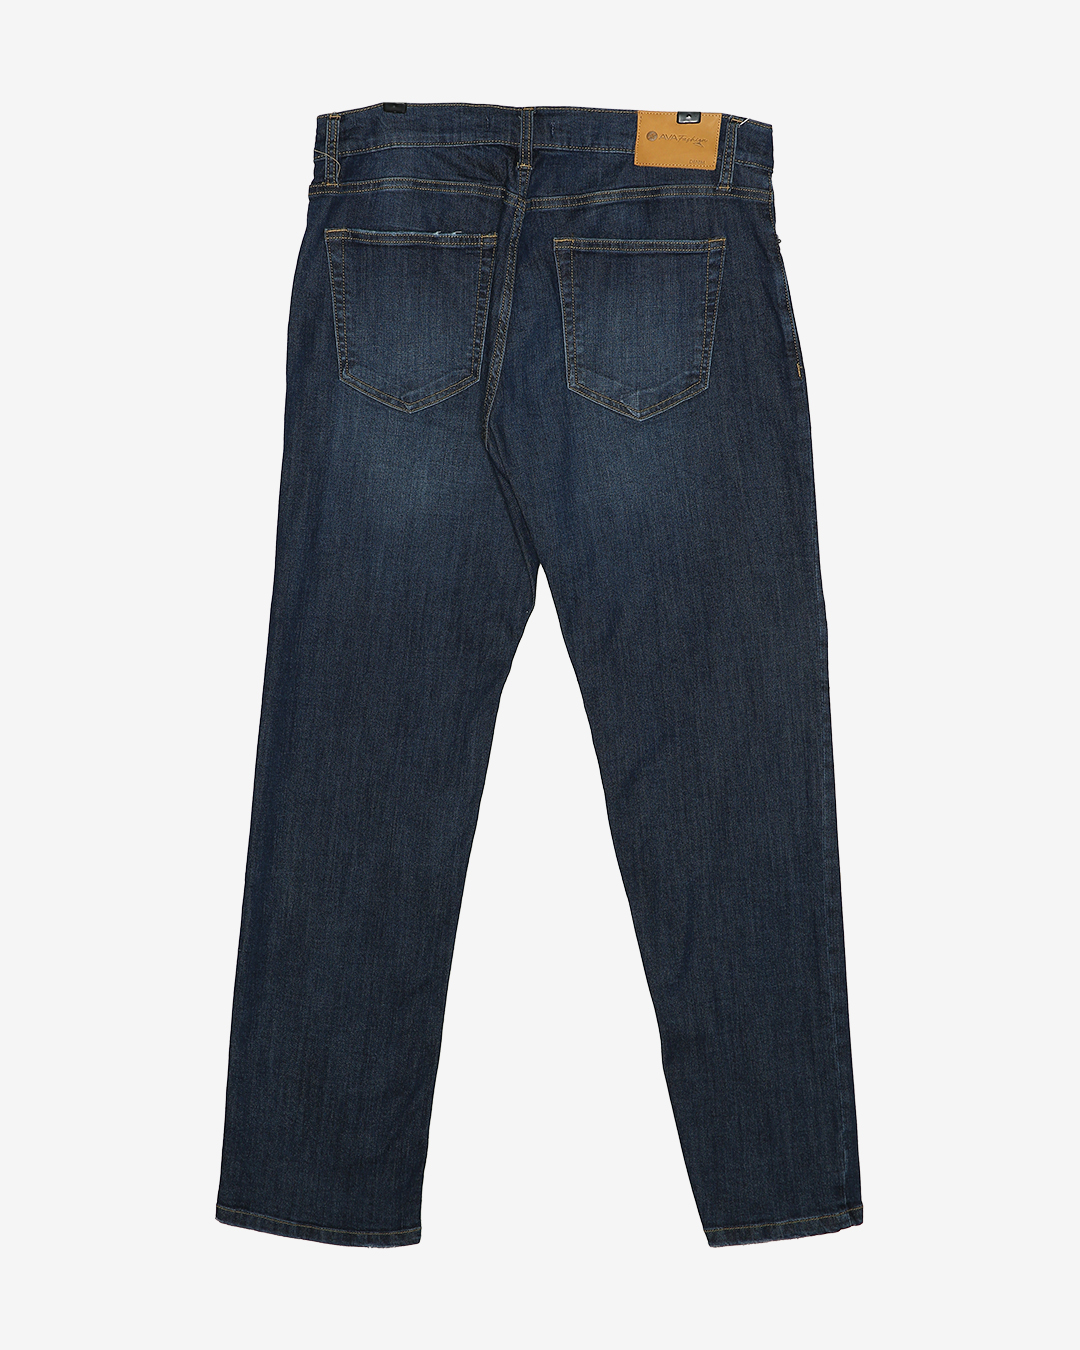 Quần jeans nam straight fit AVAFashion TNCPRTL - Xanh đậm - dark-2